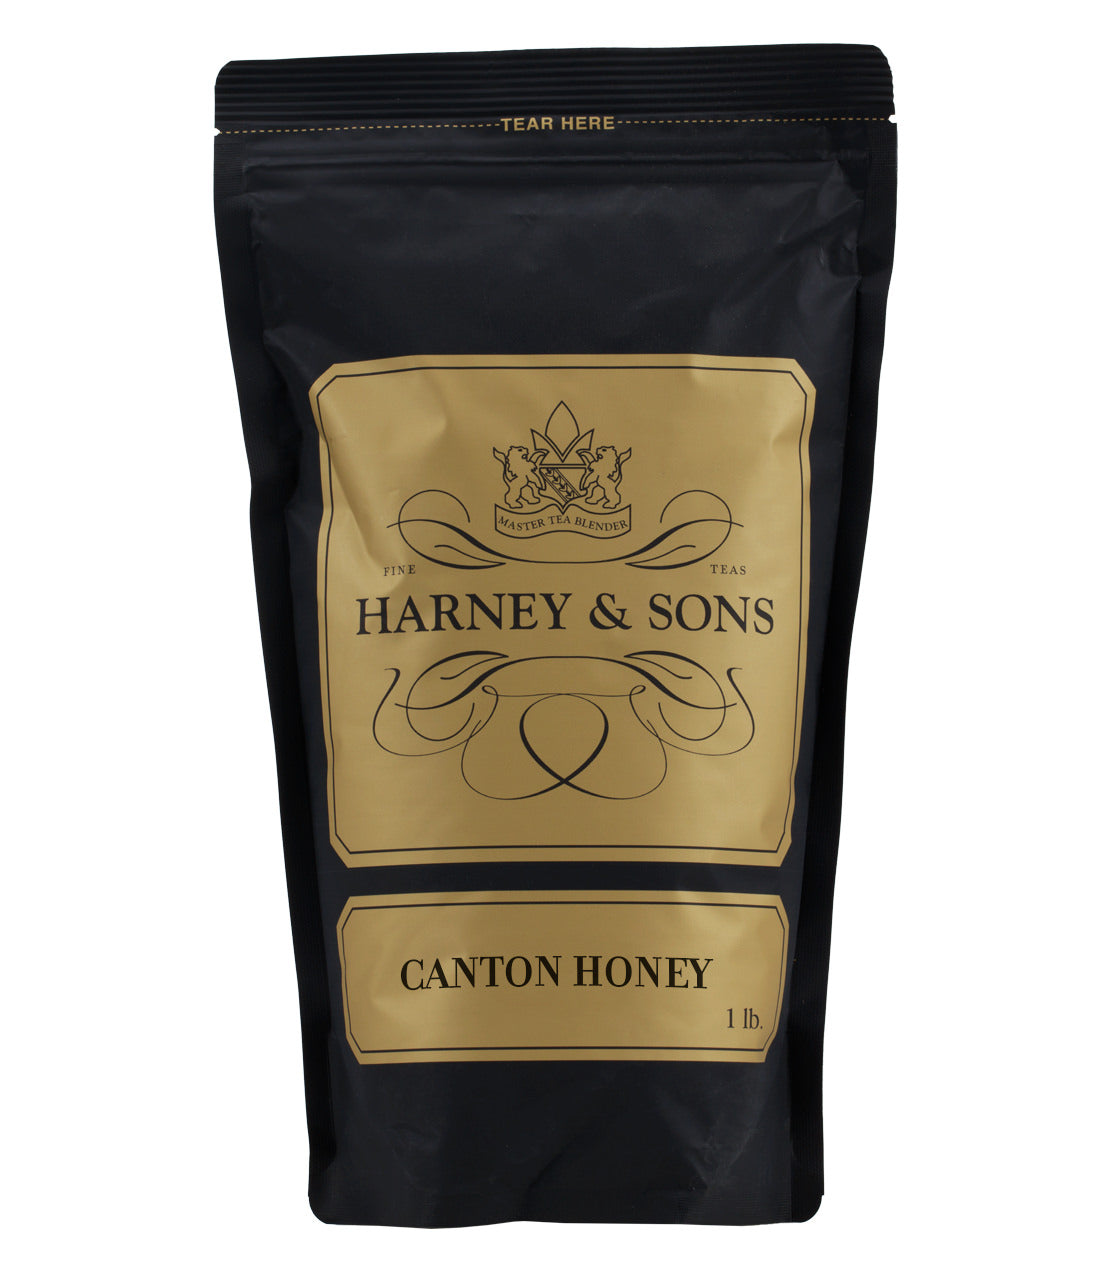 Canton Honey Black - Loose 1 lb. Bag - Harney & Sons Fine Teas